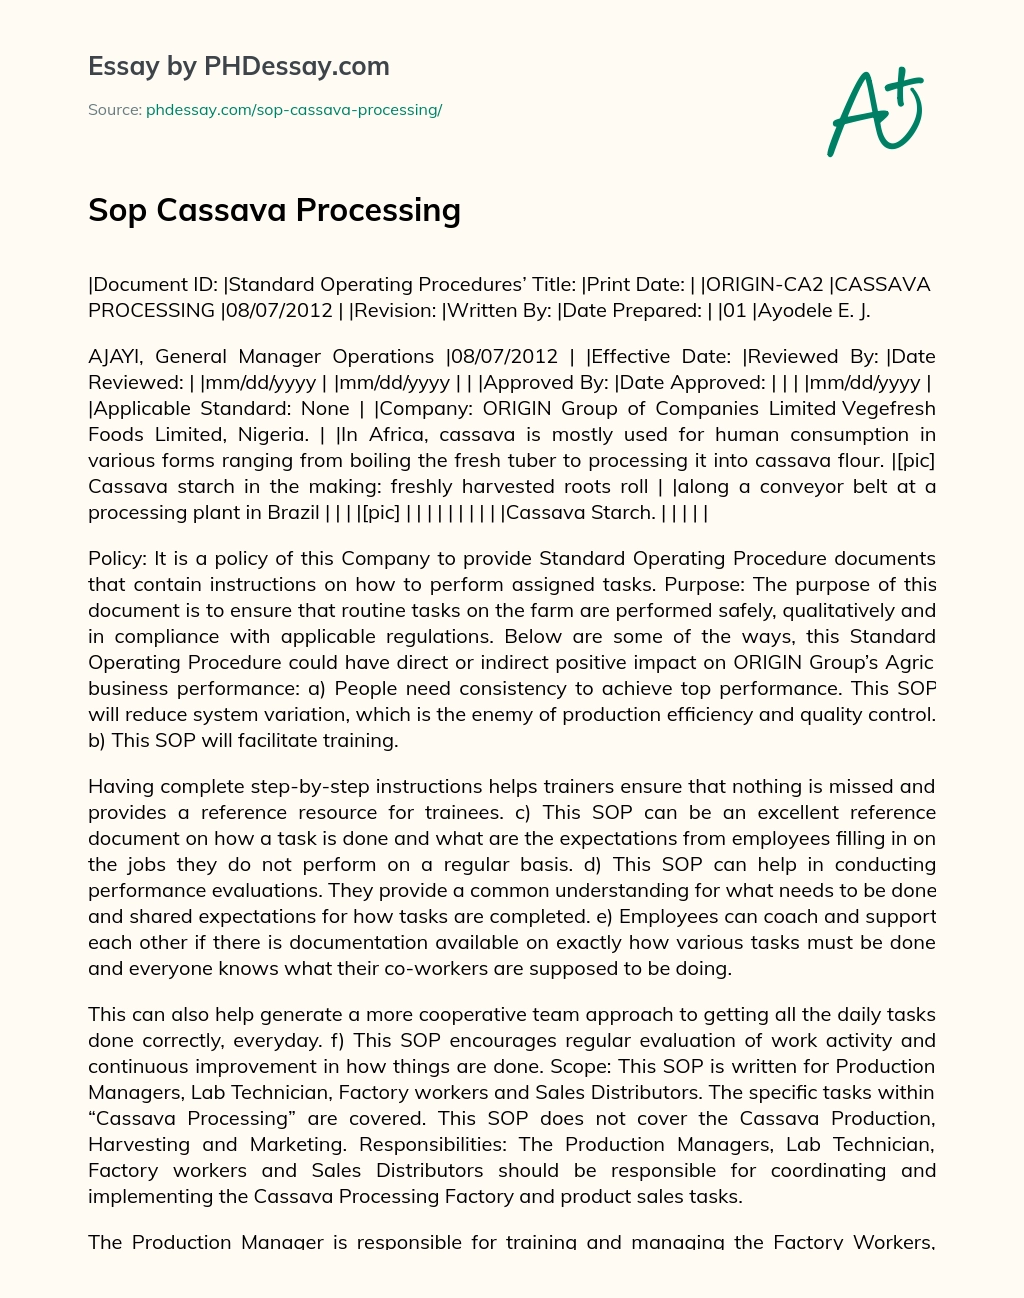 Sop Cassava Processing essay